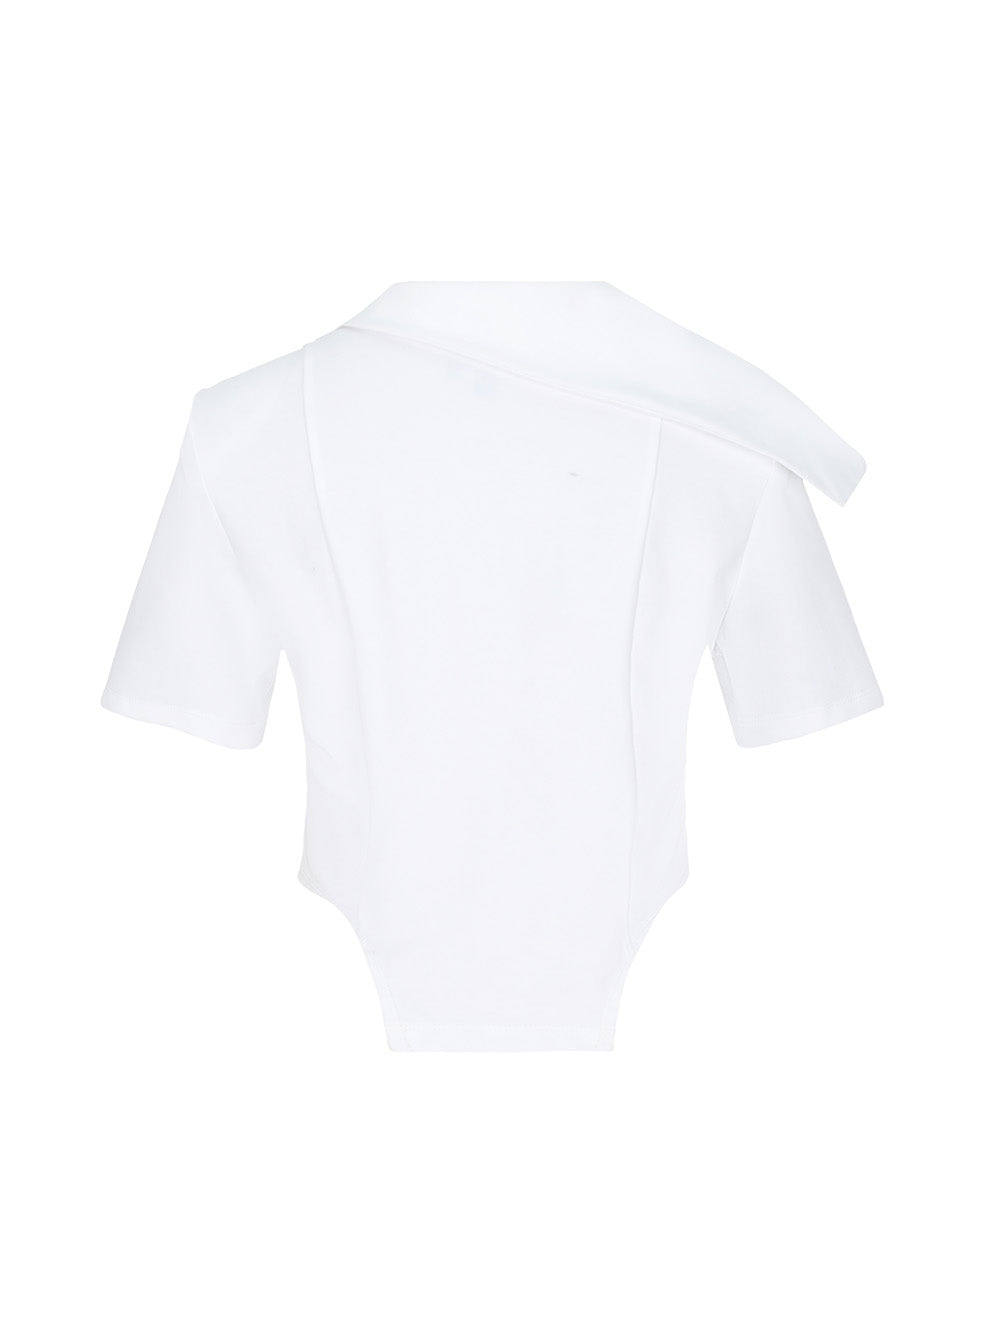 MUKZIN Cropped T-shirt With Irregular Collar